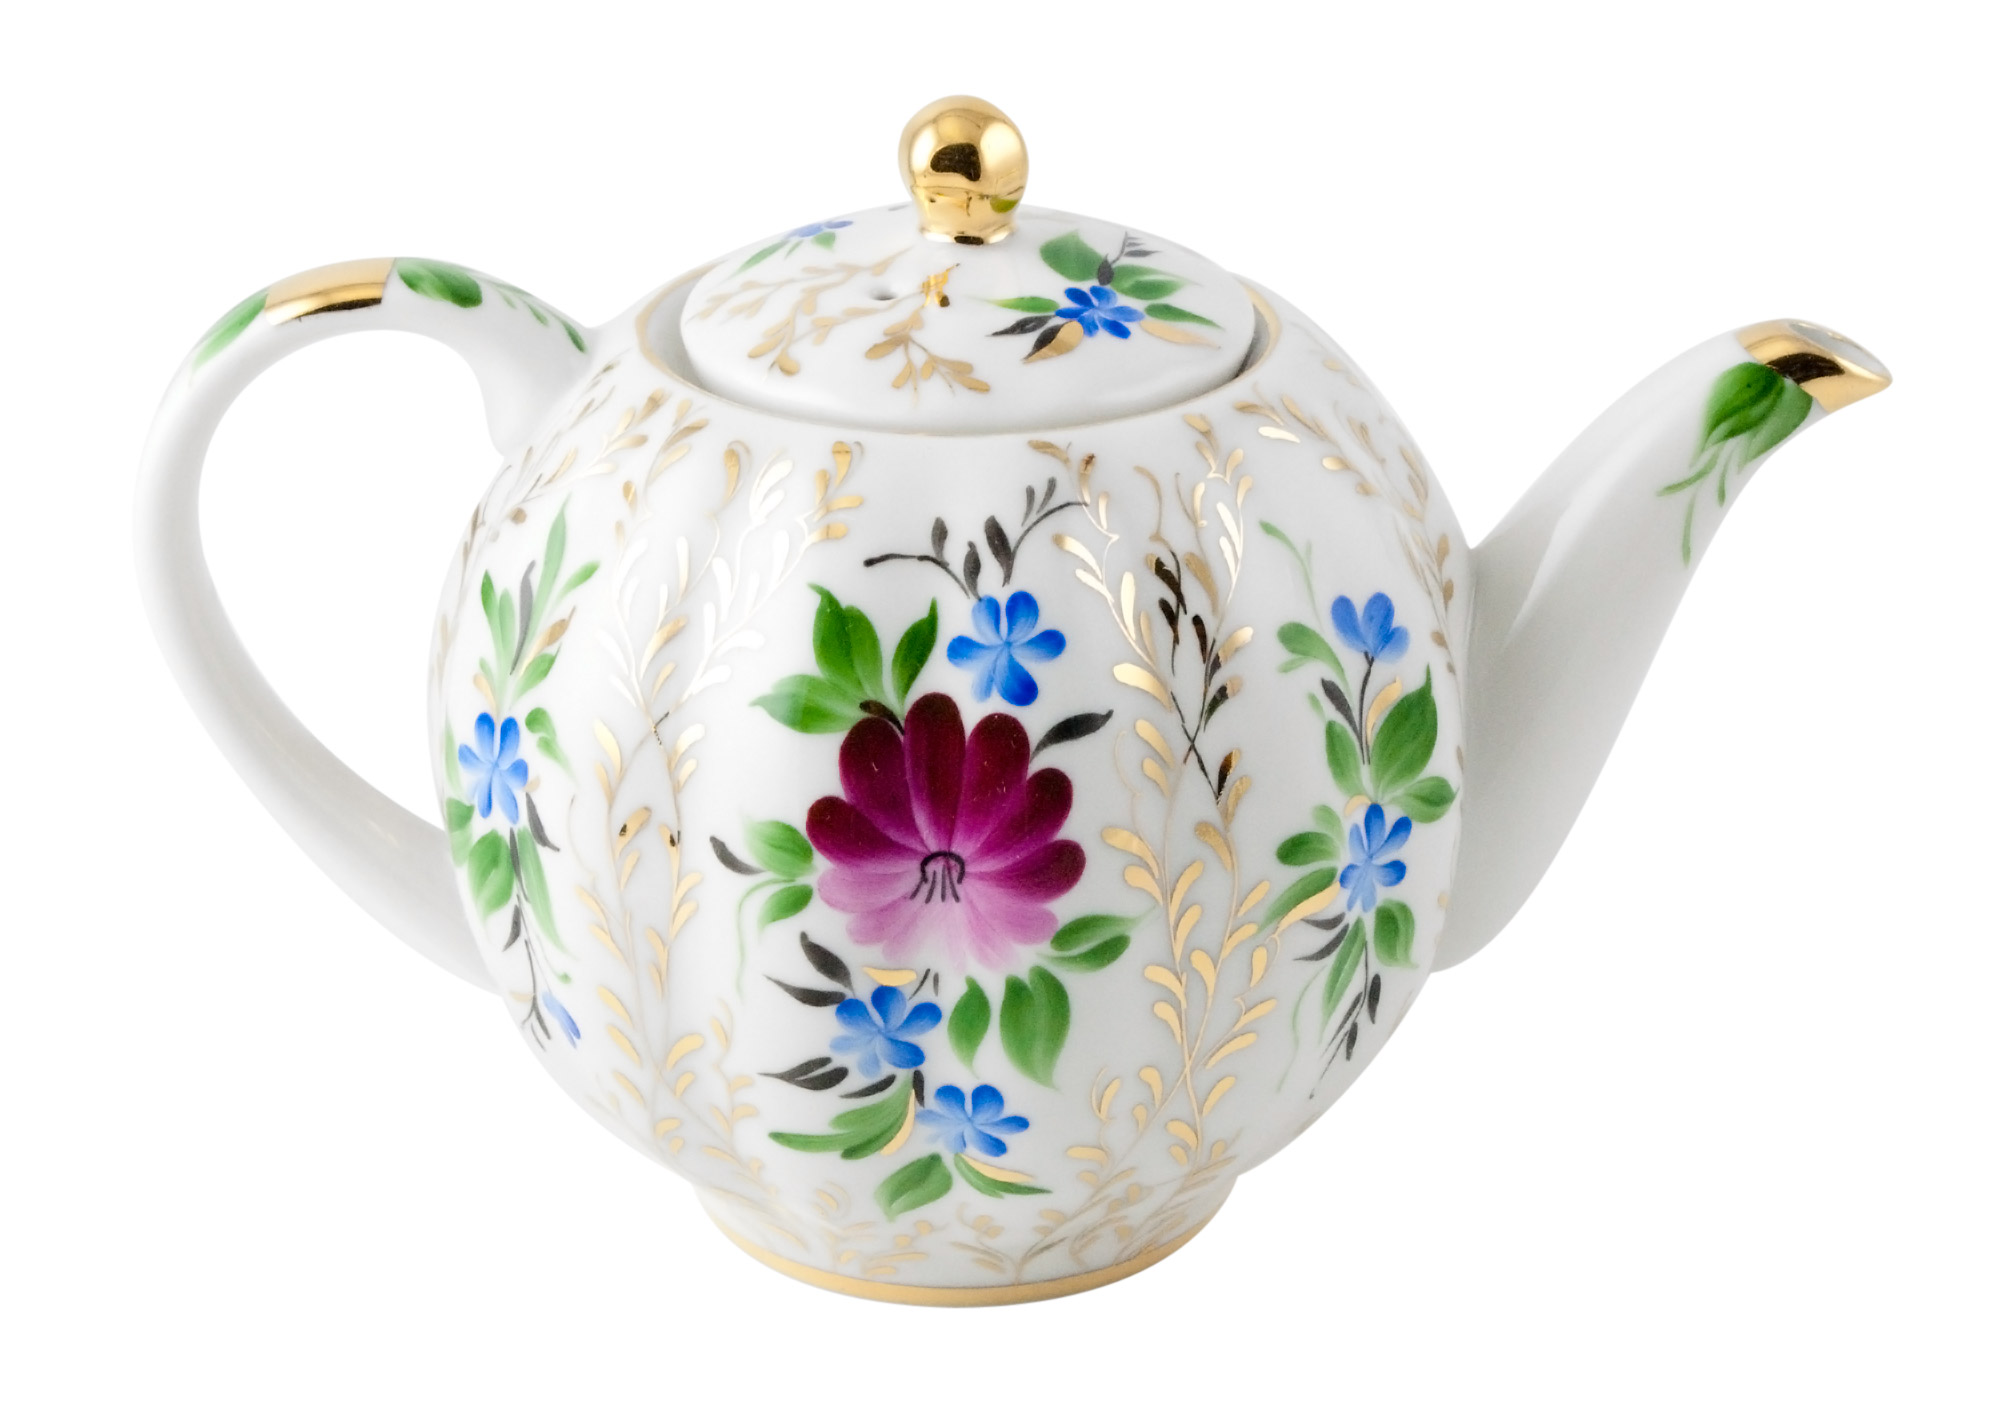 Buy Golden Grass Teapot at GoldenCockerel.com